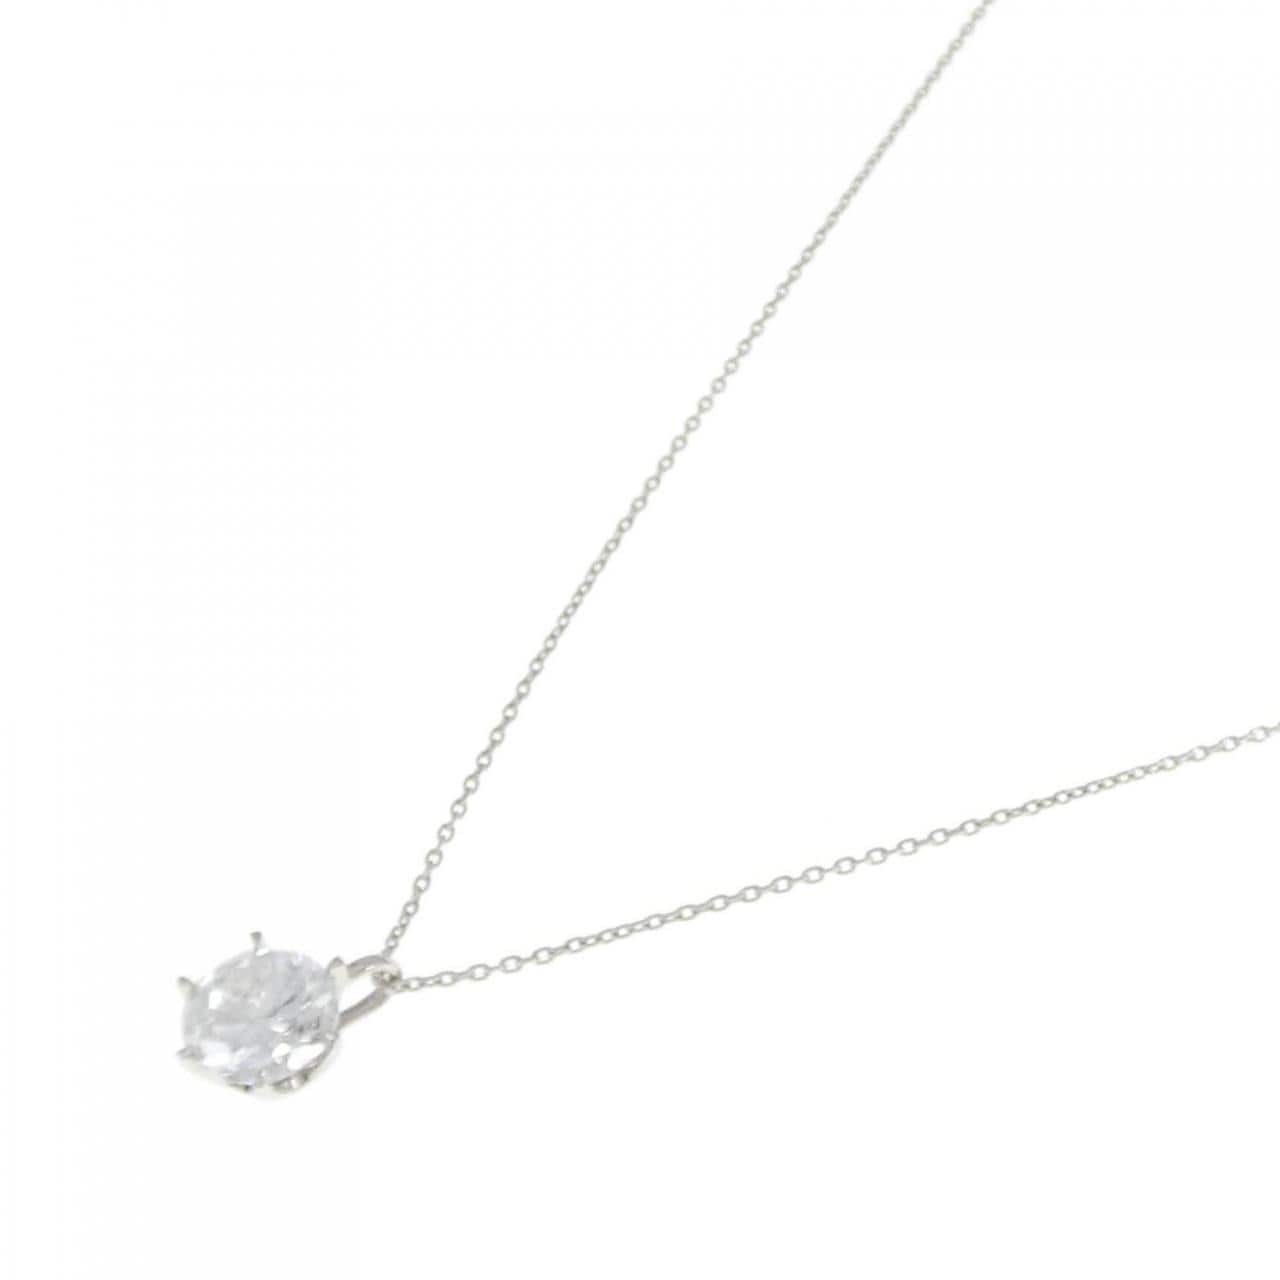 [Remake] PT Diamond Necklace 3.008CT D I1 Good